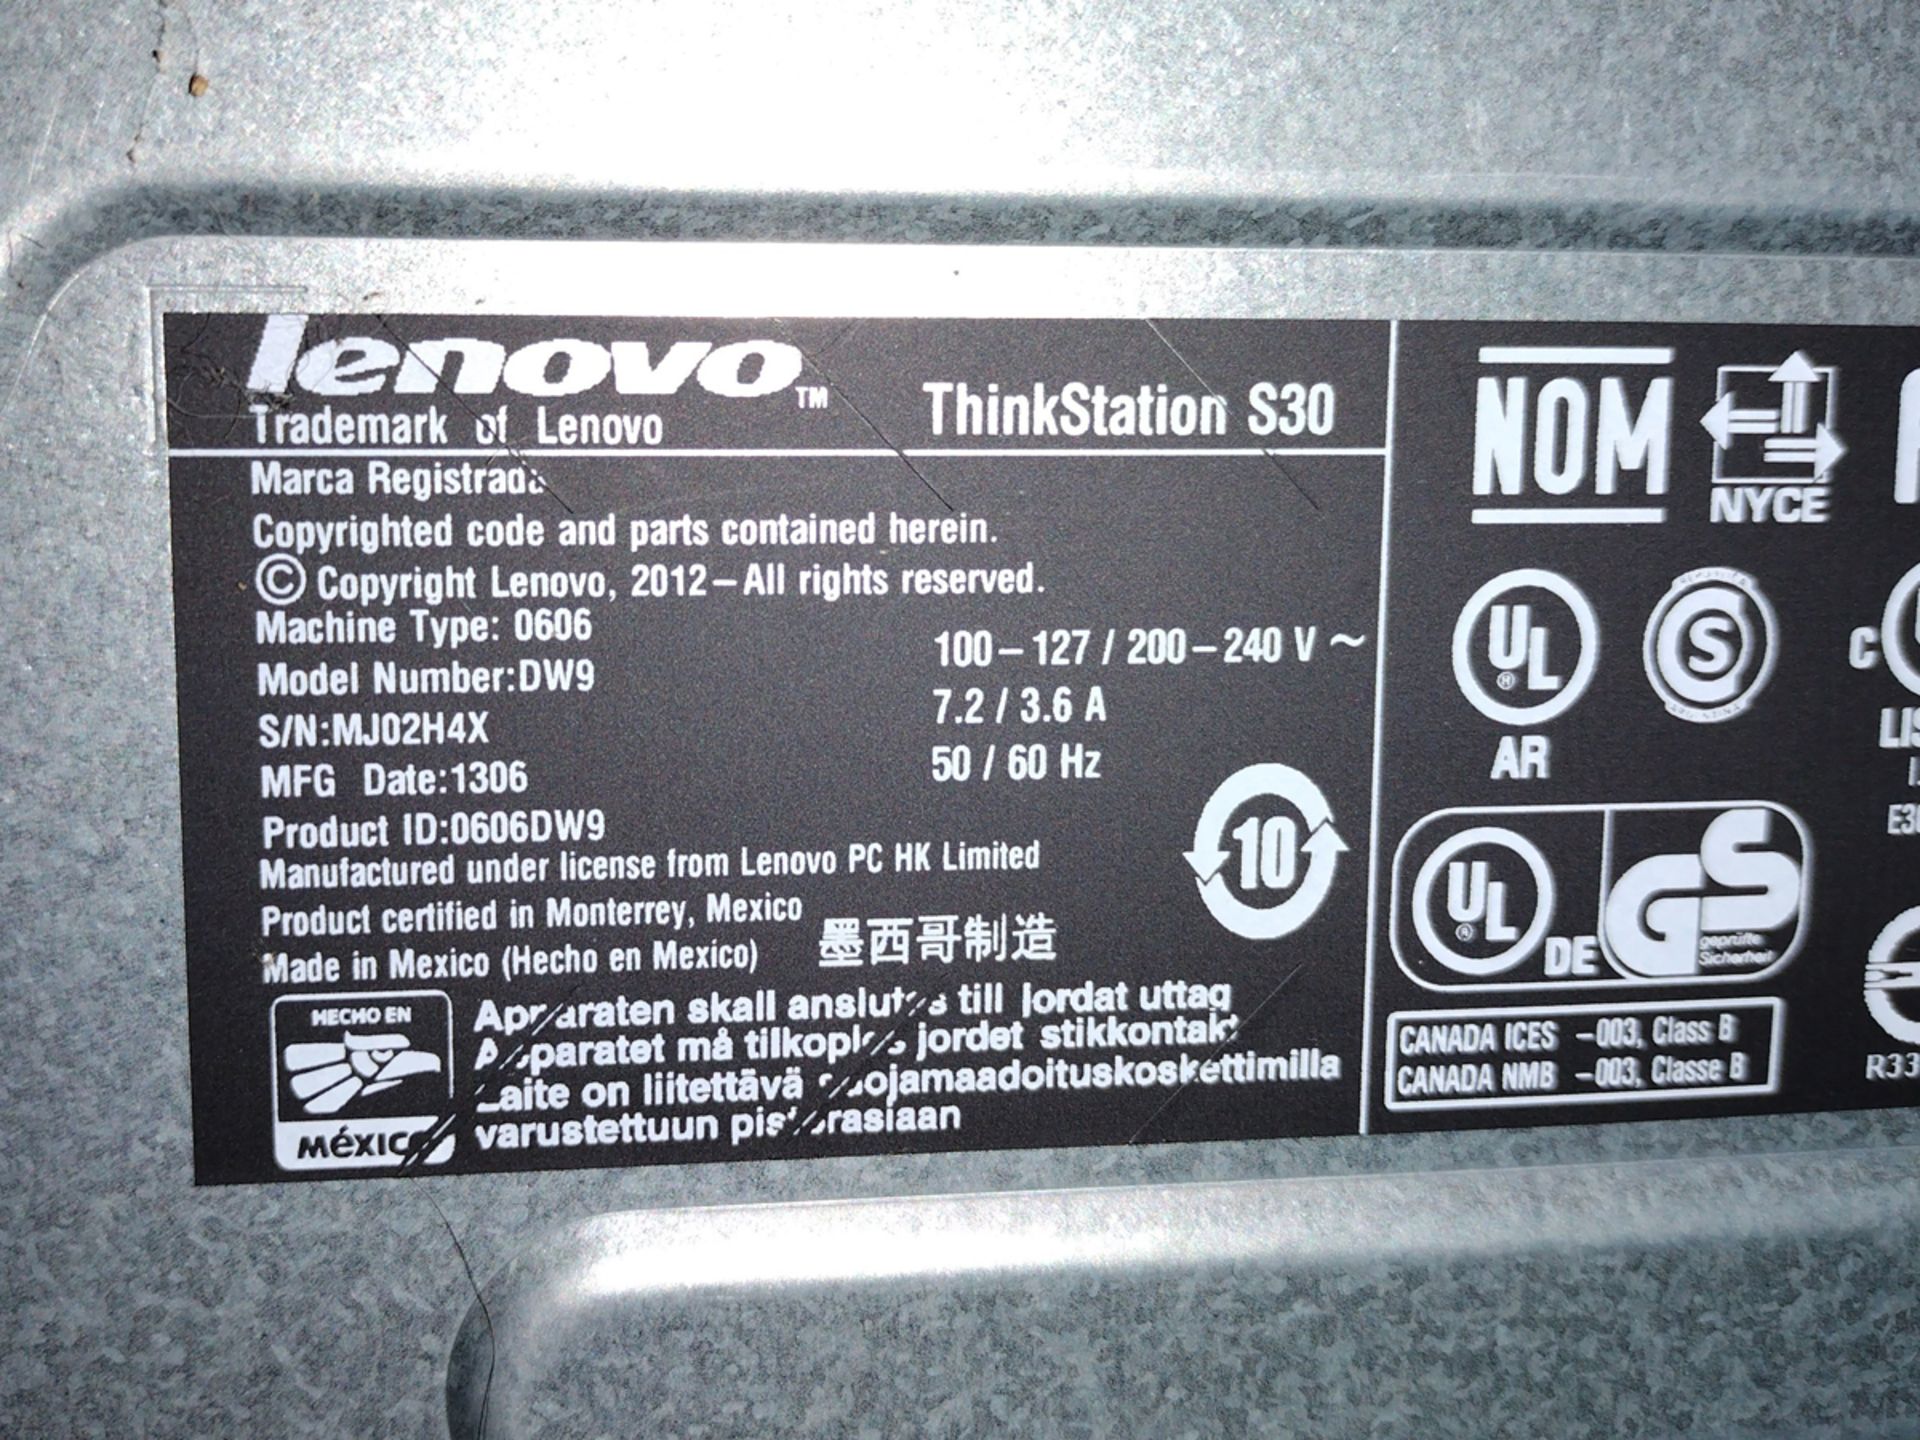 Lenovo S30 ThinkStation Xeon PC w/ Monitor and Keyboard - Image 2 of 2